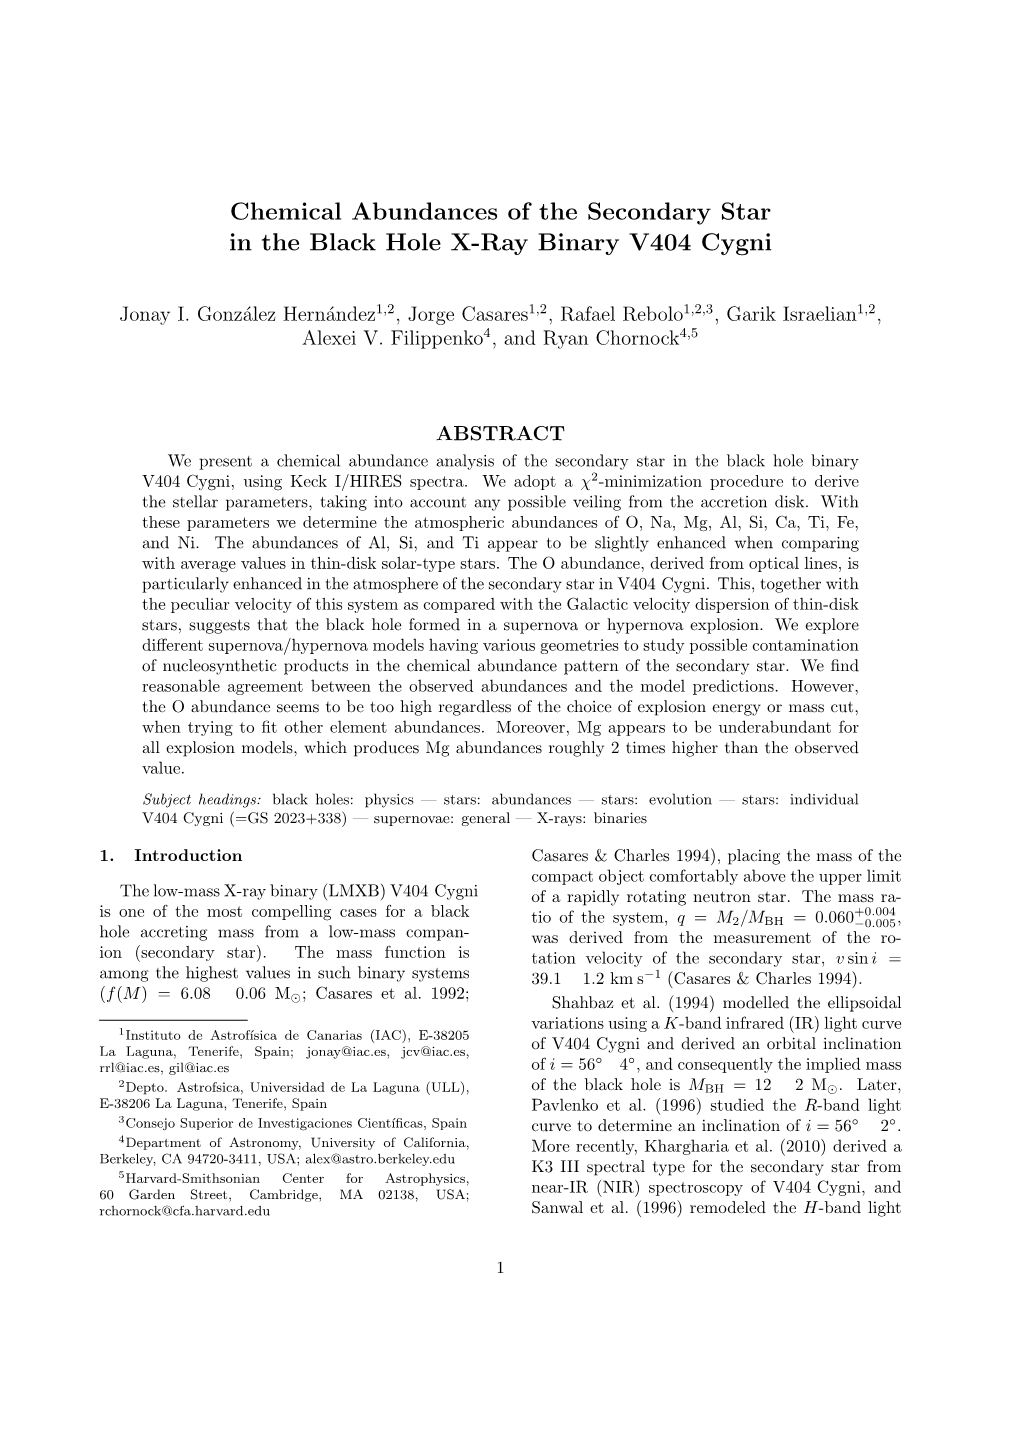 Chemical Abundances of the Secondary Star in the Black Hole X-Ray Binary V404 Cygni